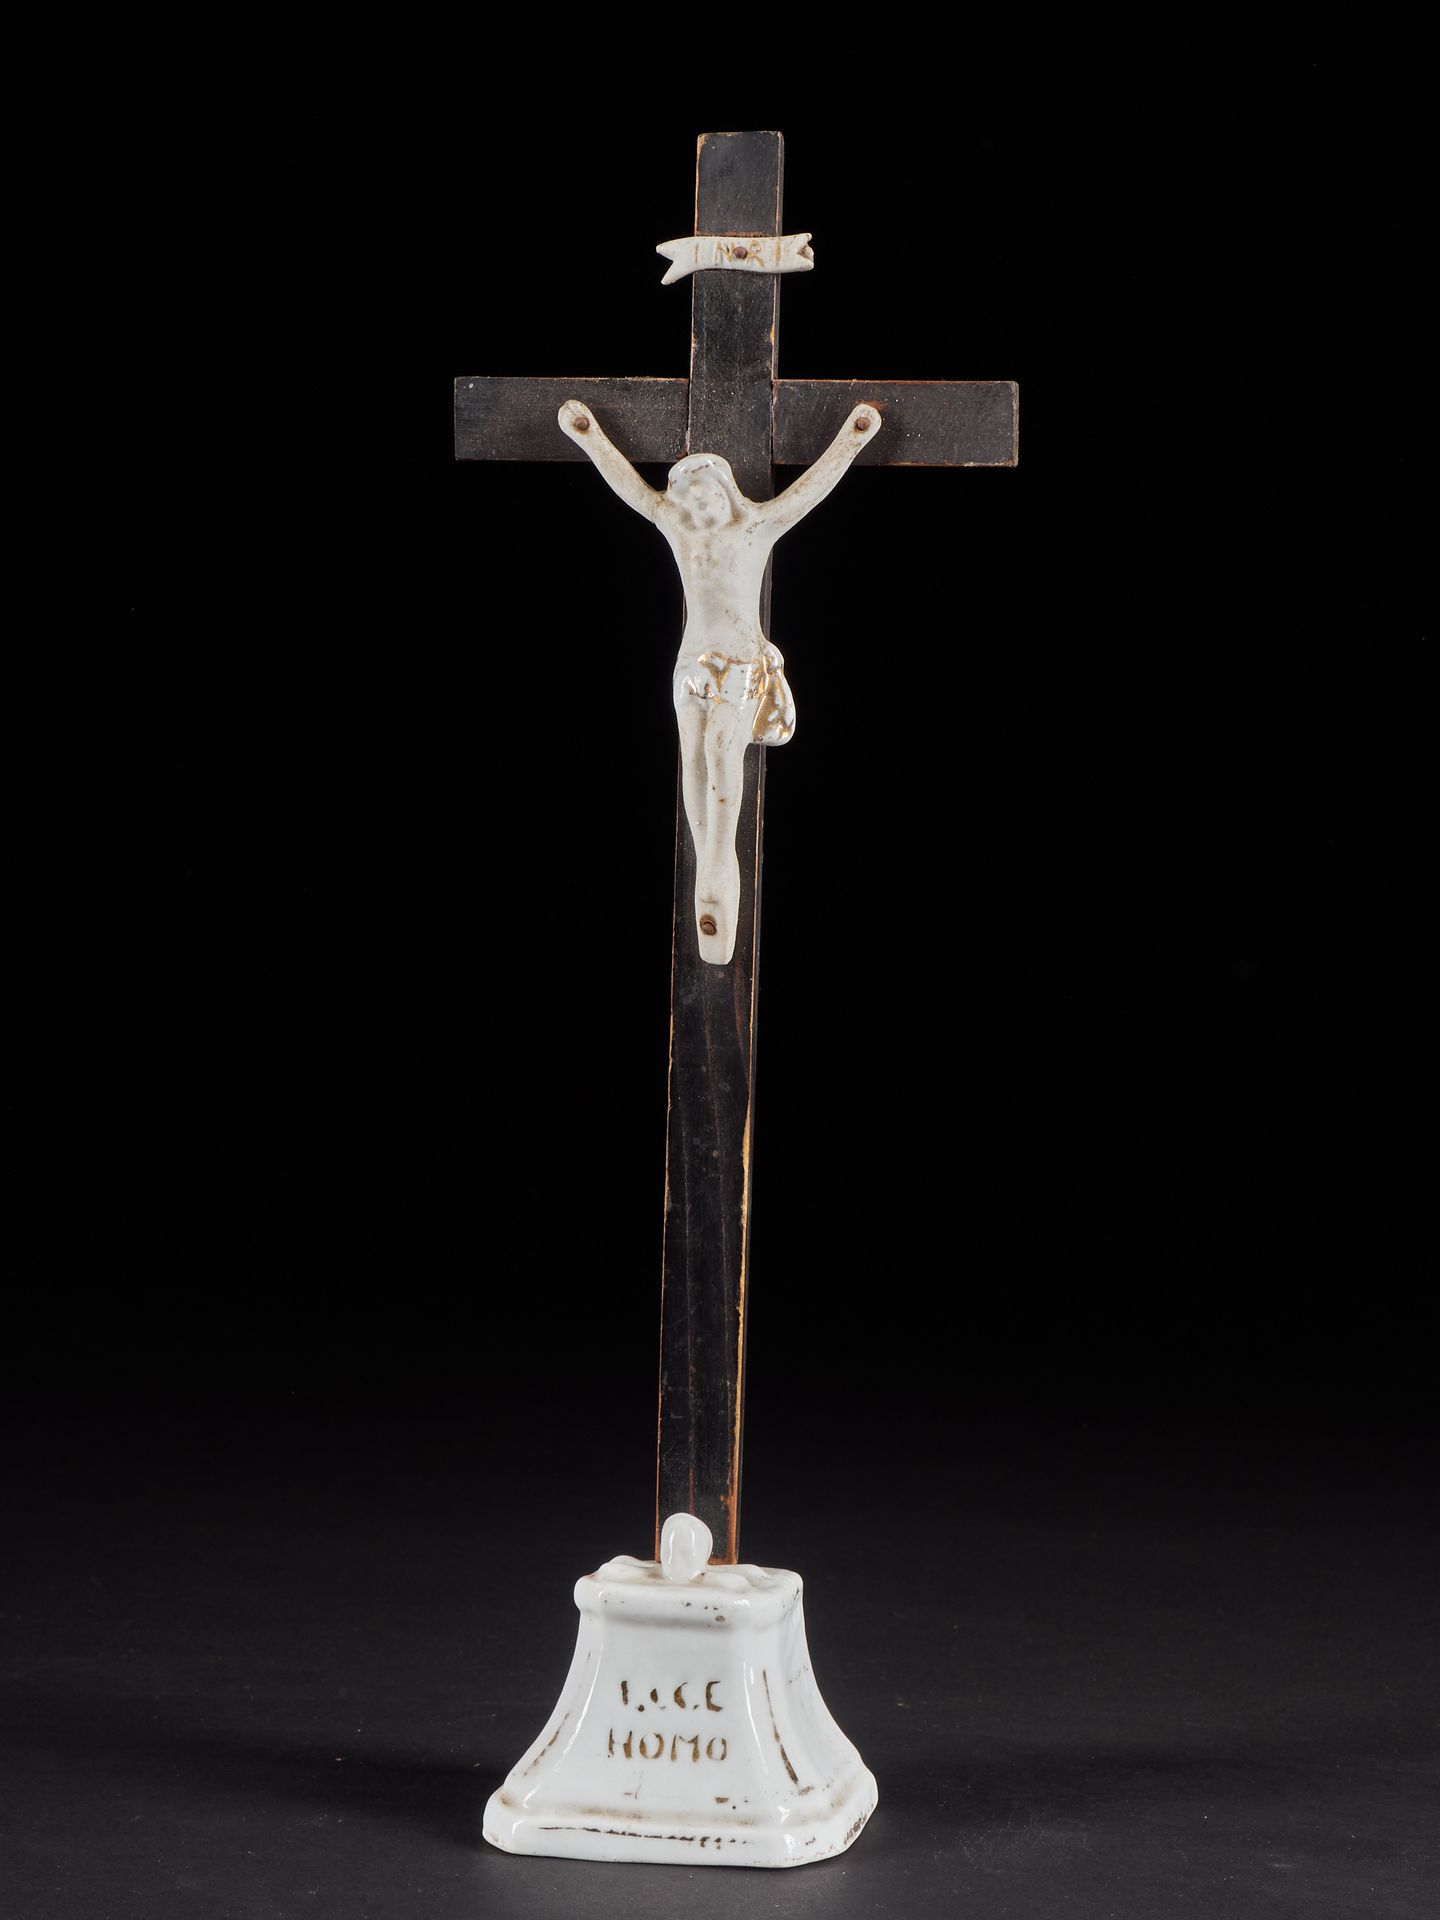 Null 十字架上有一个十字架，底座上有耶稣的身影。HOMO的背影。